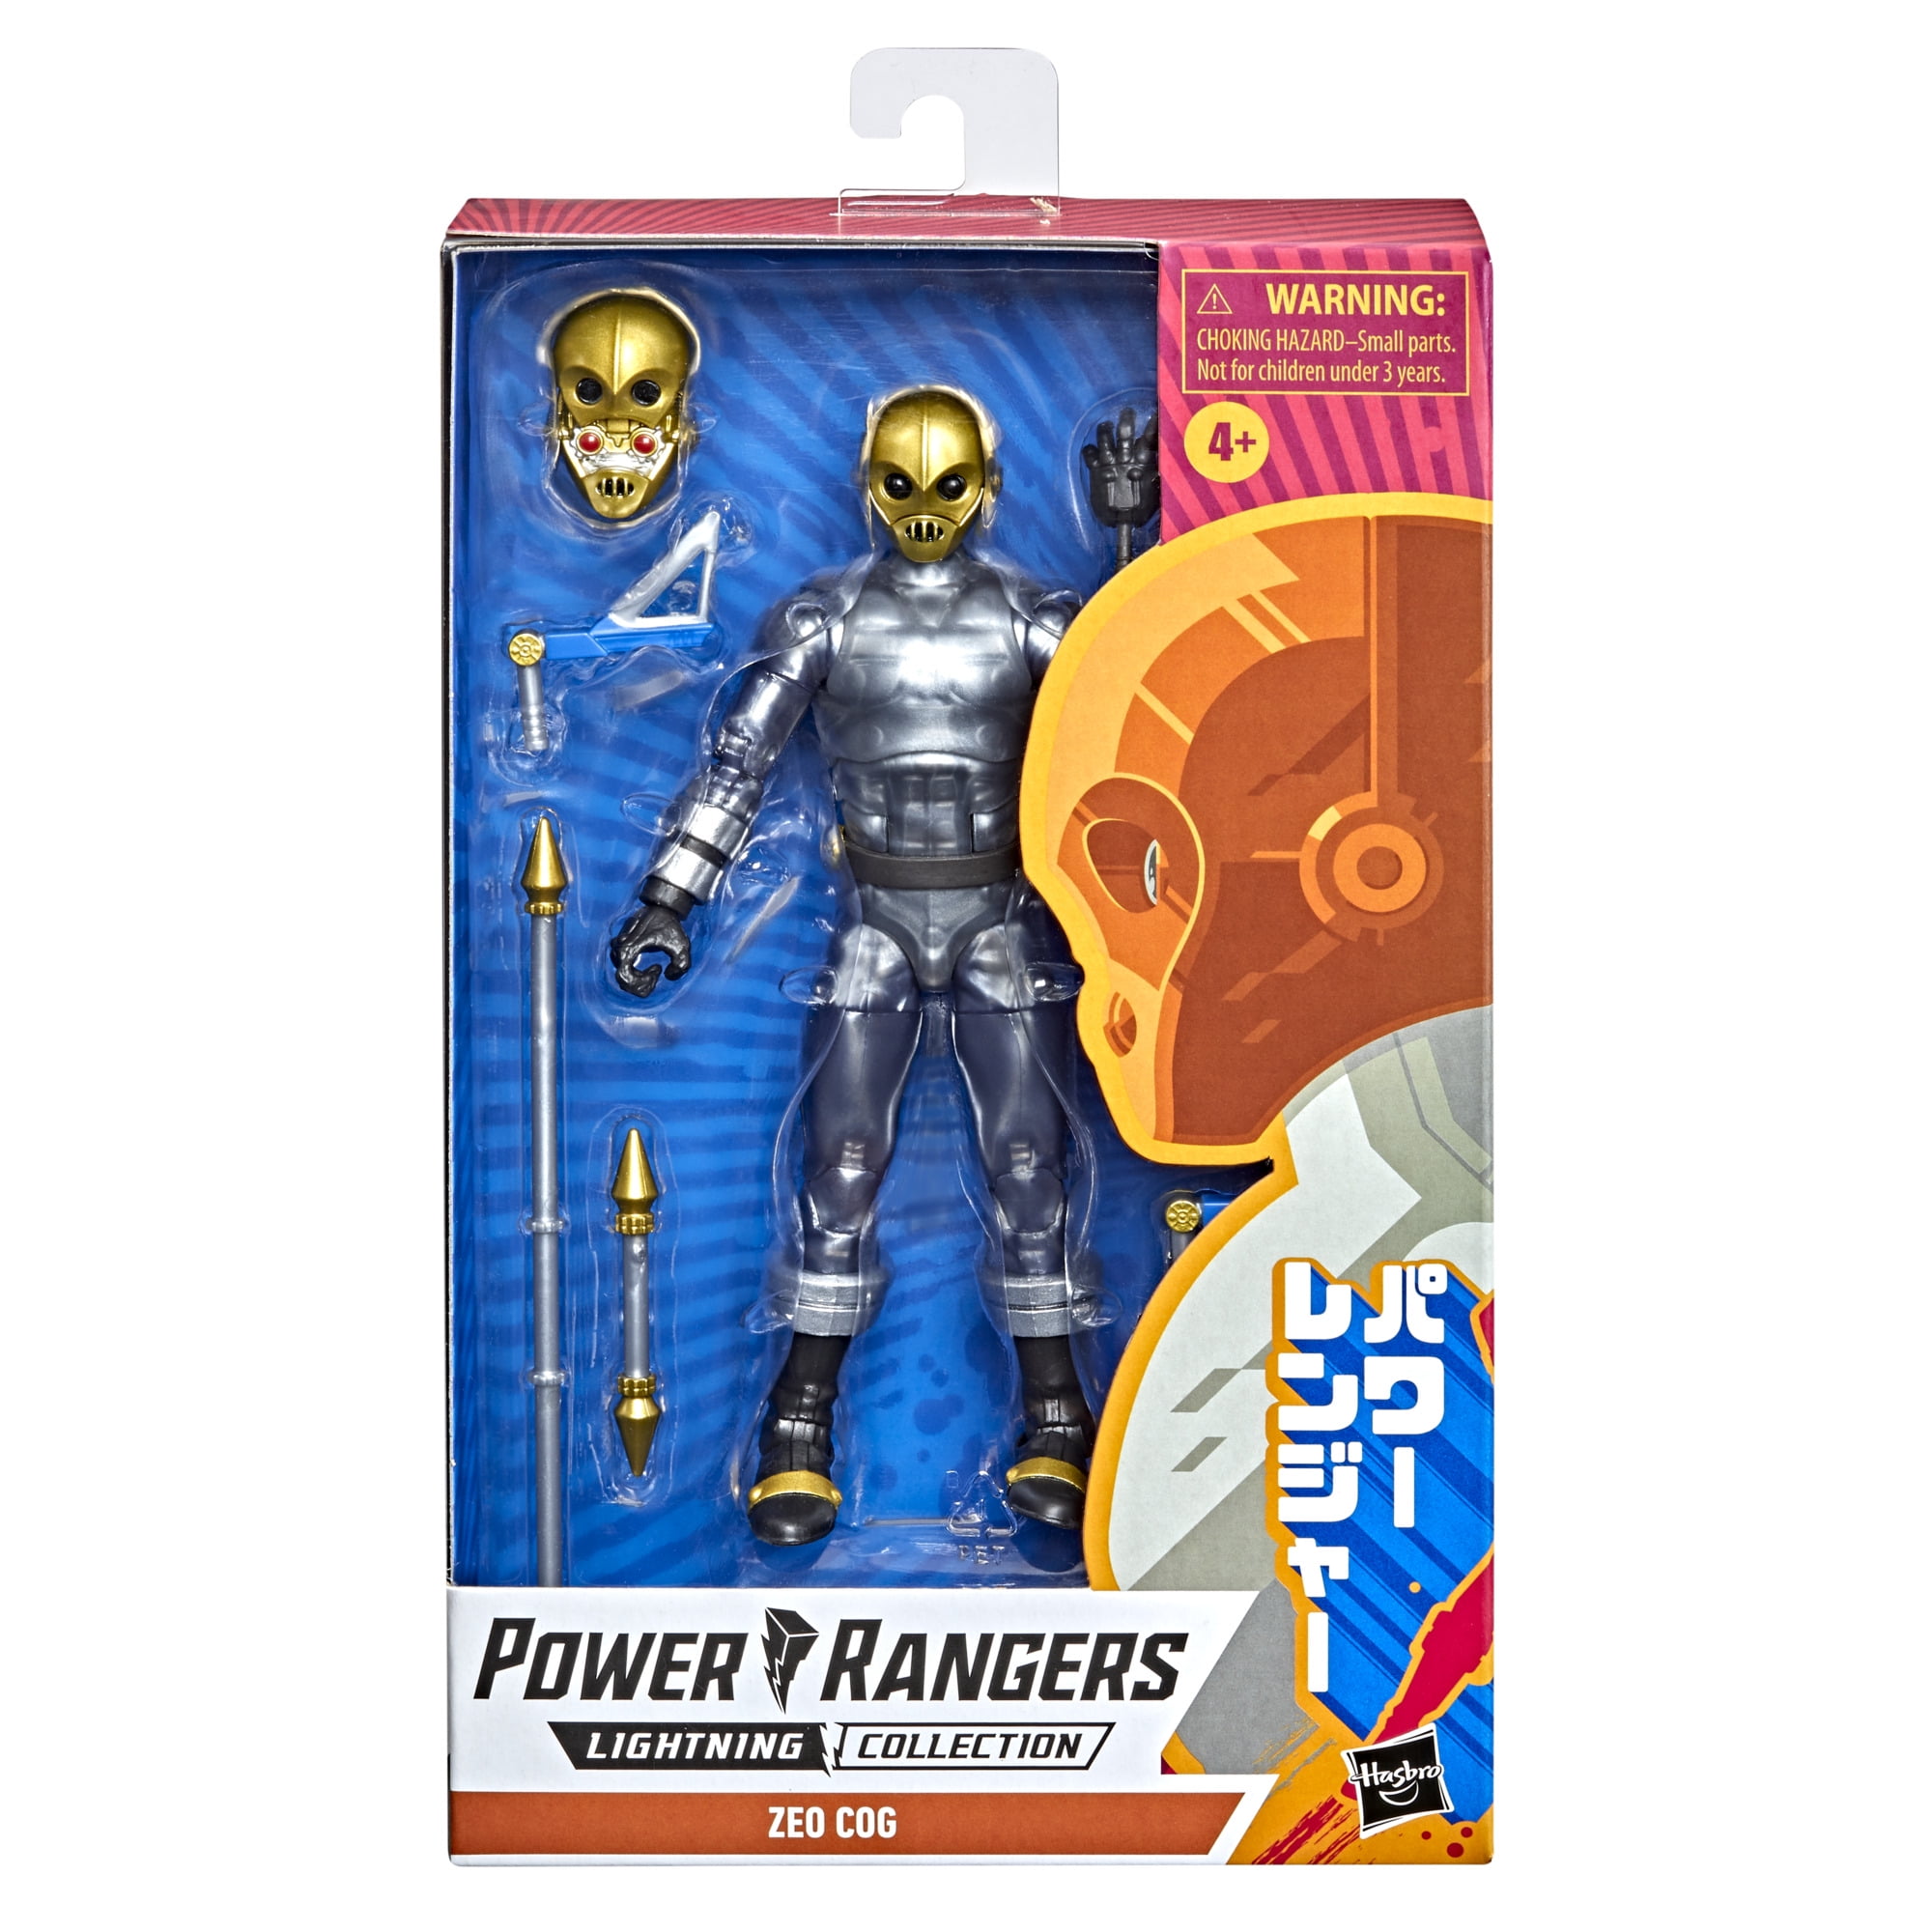 Power Rangers Lightning Collection Zeo Cog Premium Collectible Action Figure